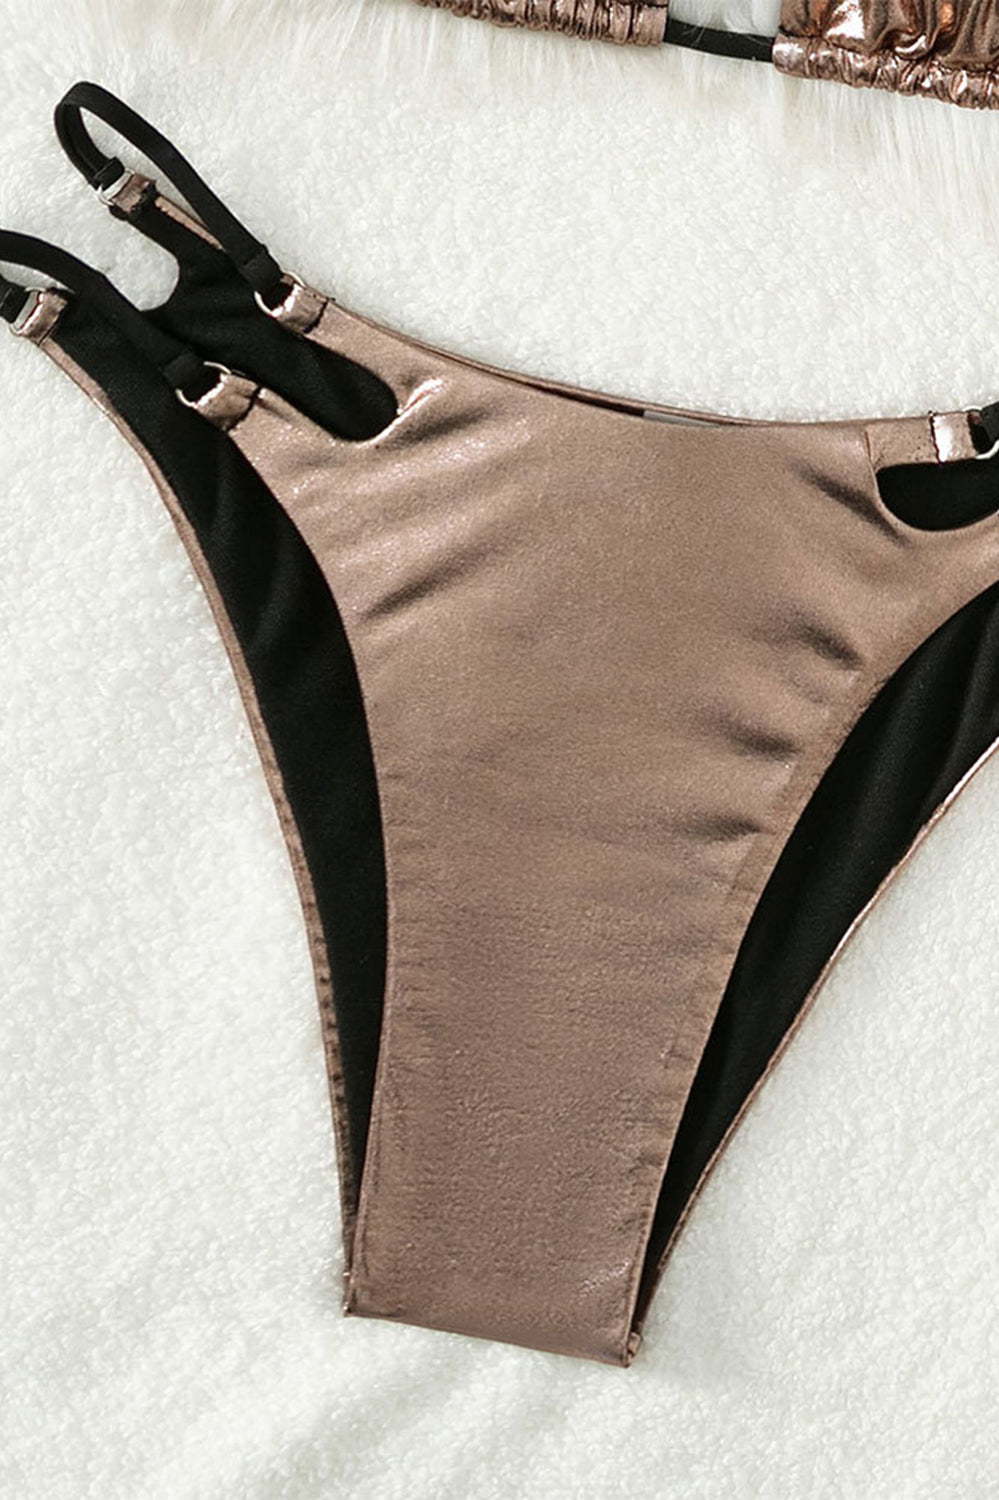 Tied Halter Neck Two-Piece Bikini Set Trendsi